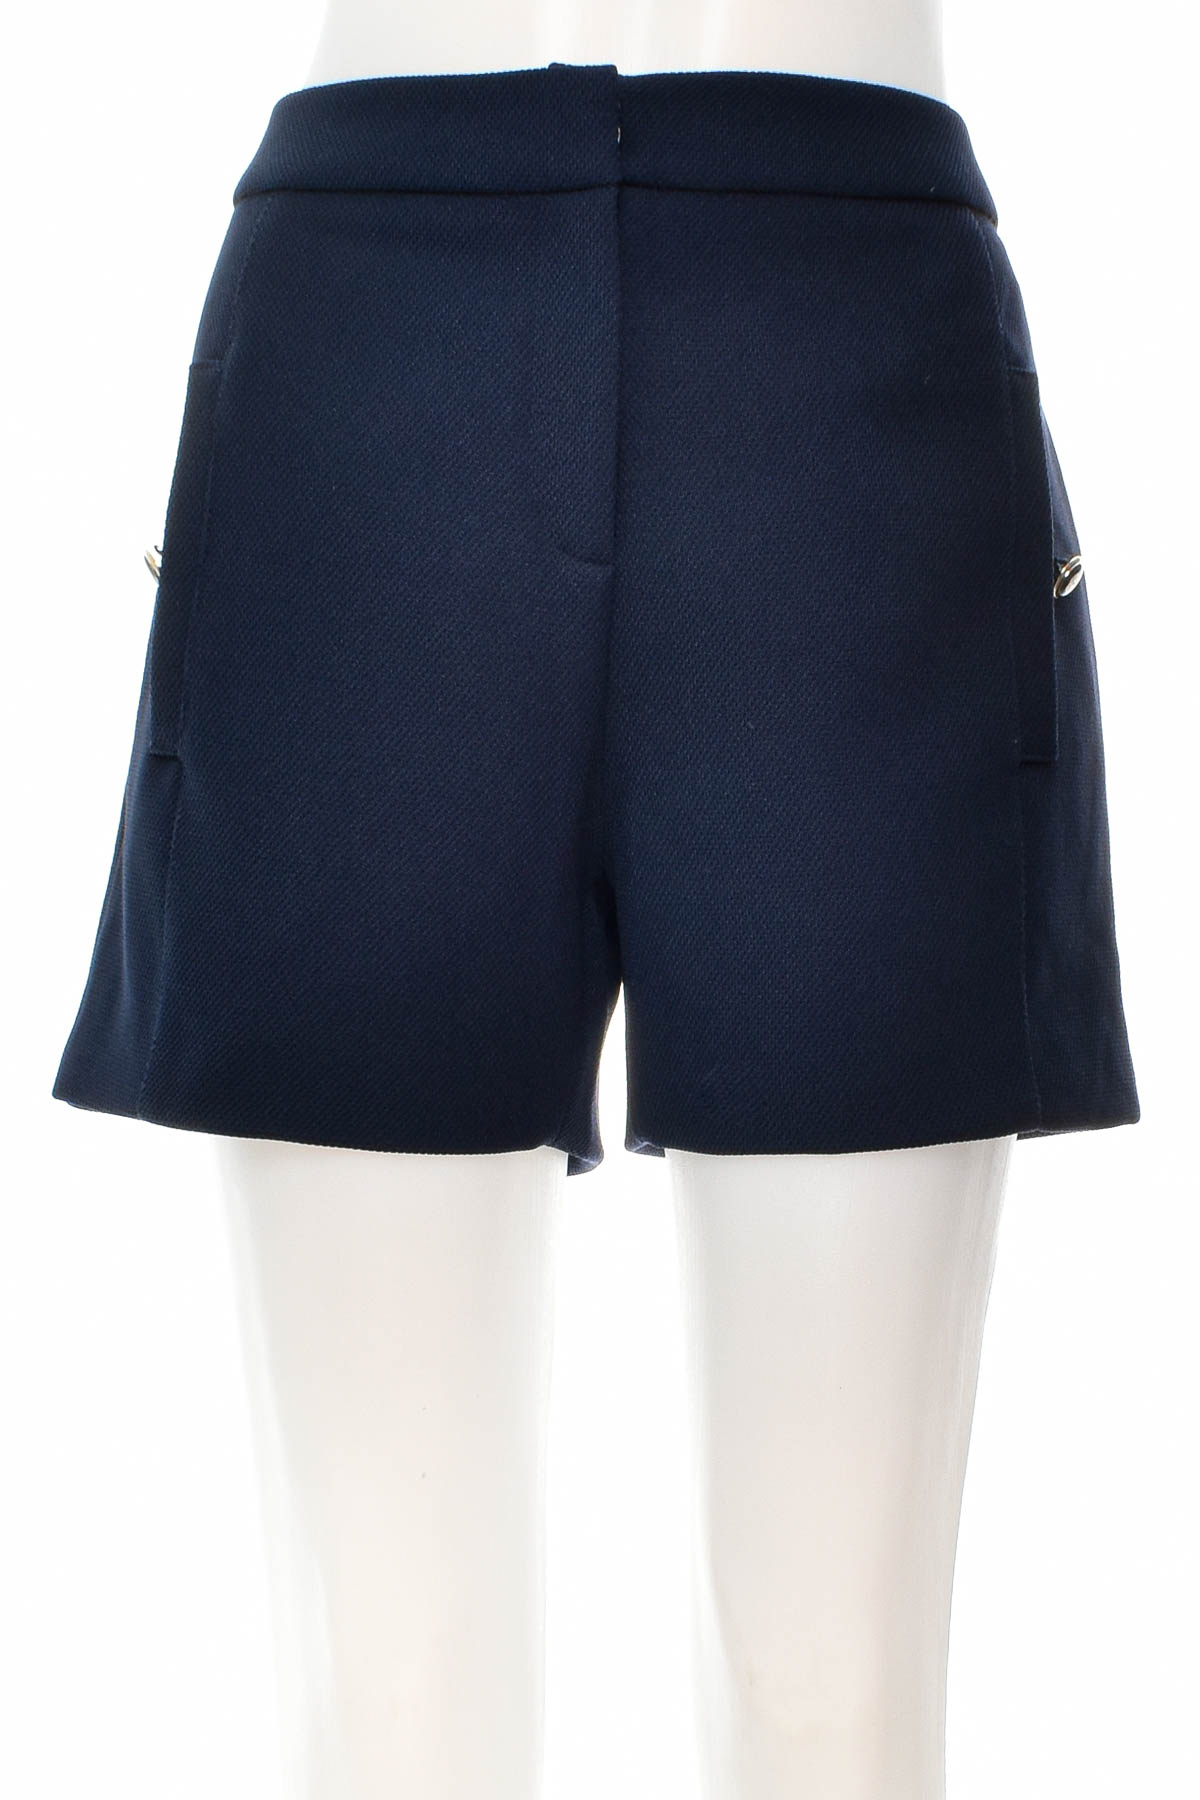 Female shorts - Morgan - 0